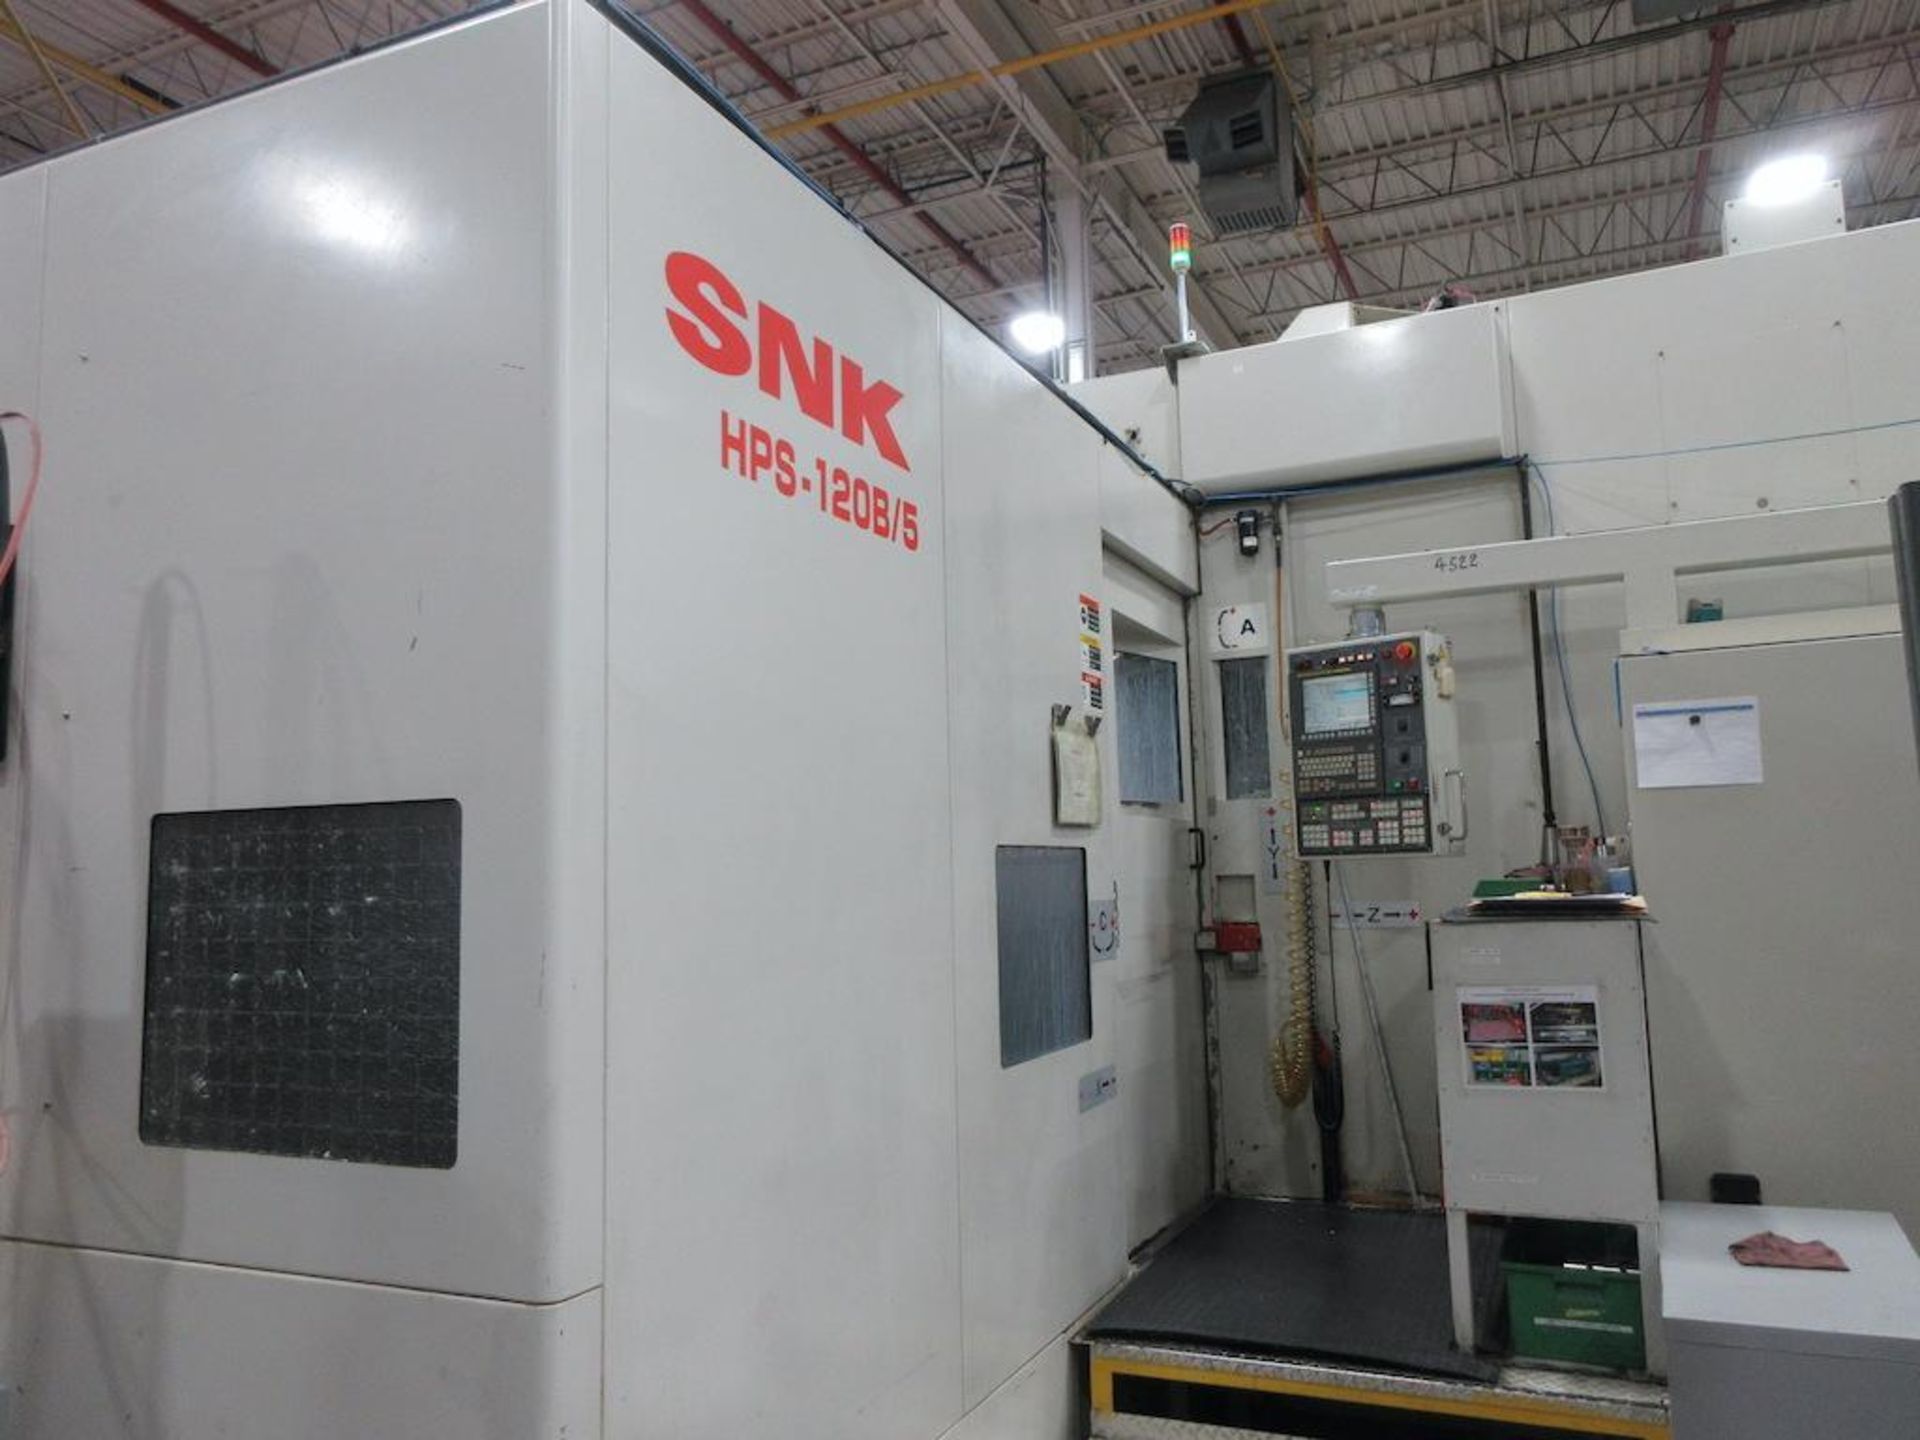 2006 SNK HPS 120B/5 5 axis high speed CNC Horizontal Machining Center Profiler, Fanuc 31i  model A5, - Image 5 of 14